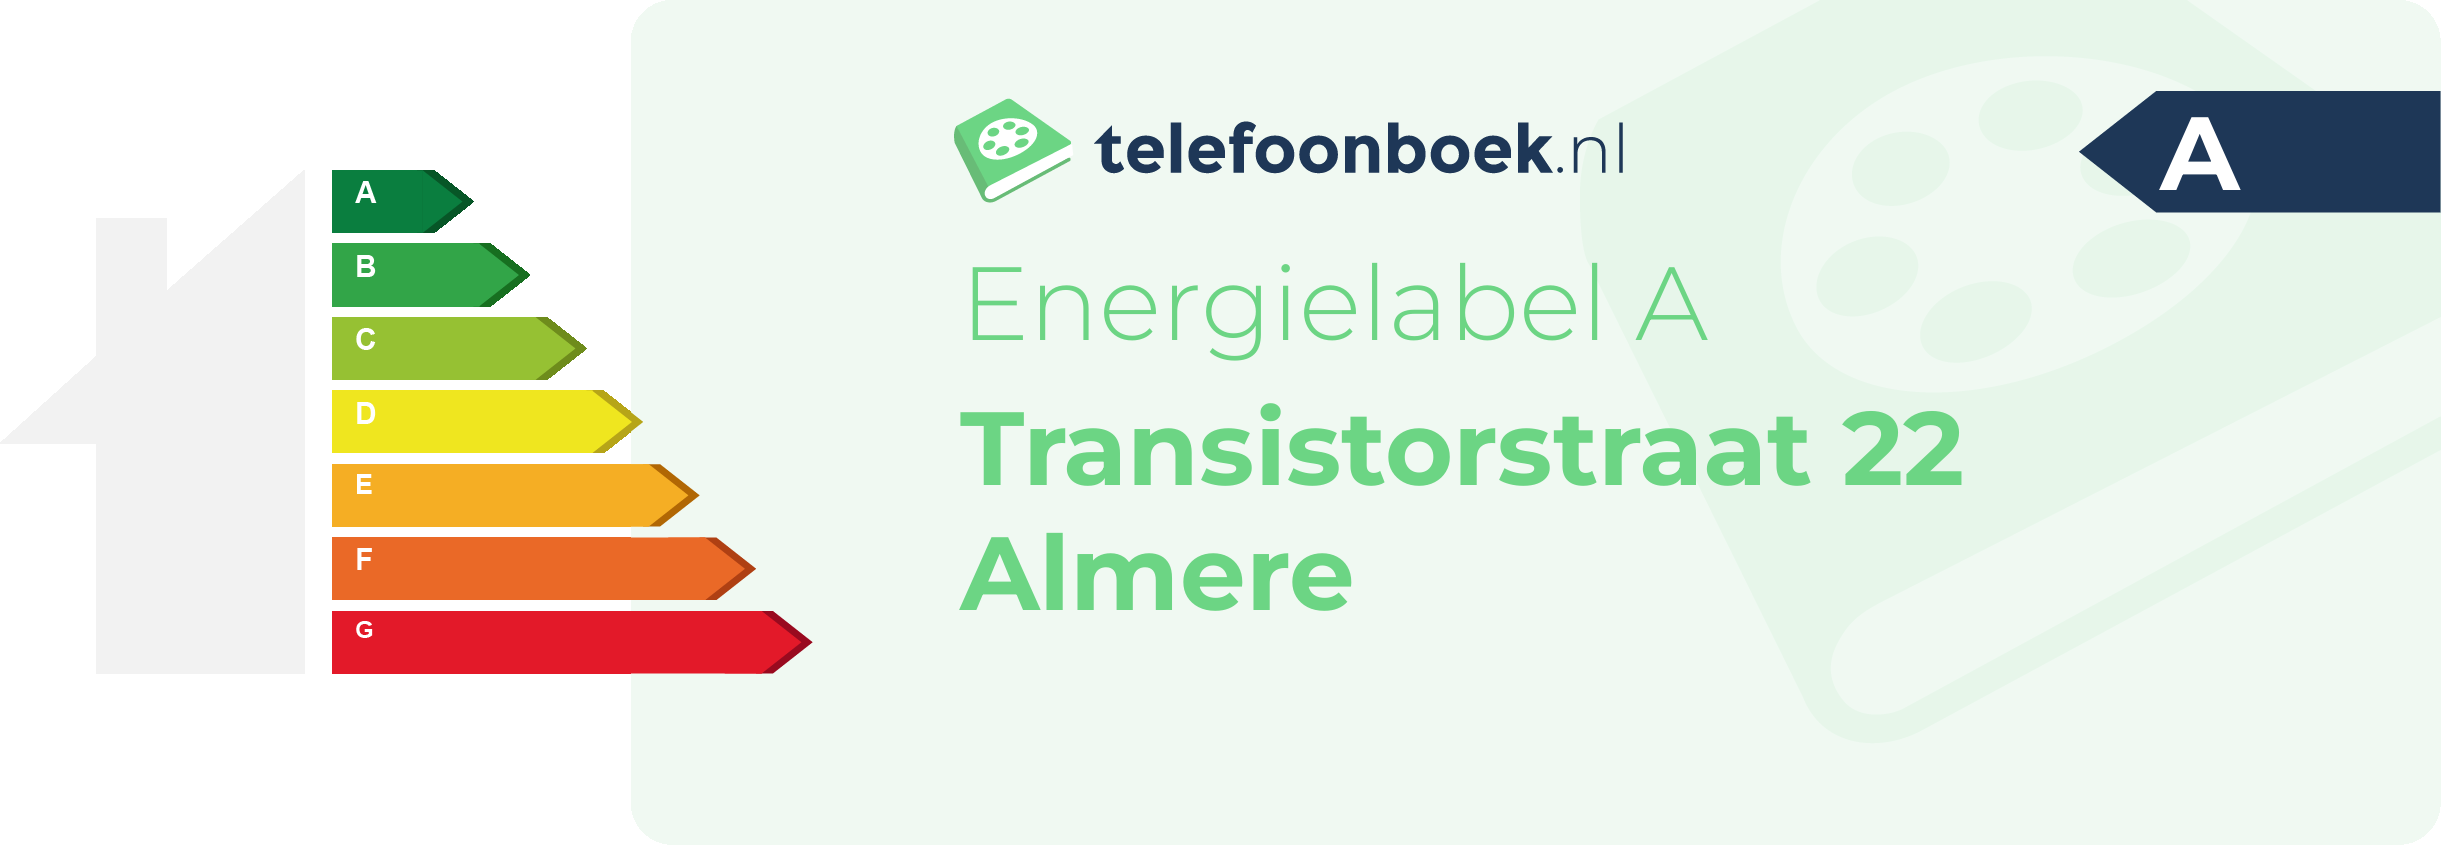 Energielabel Transistorstraat 22 Almere